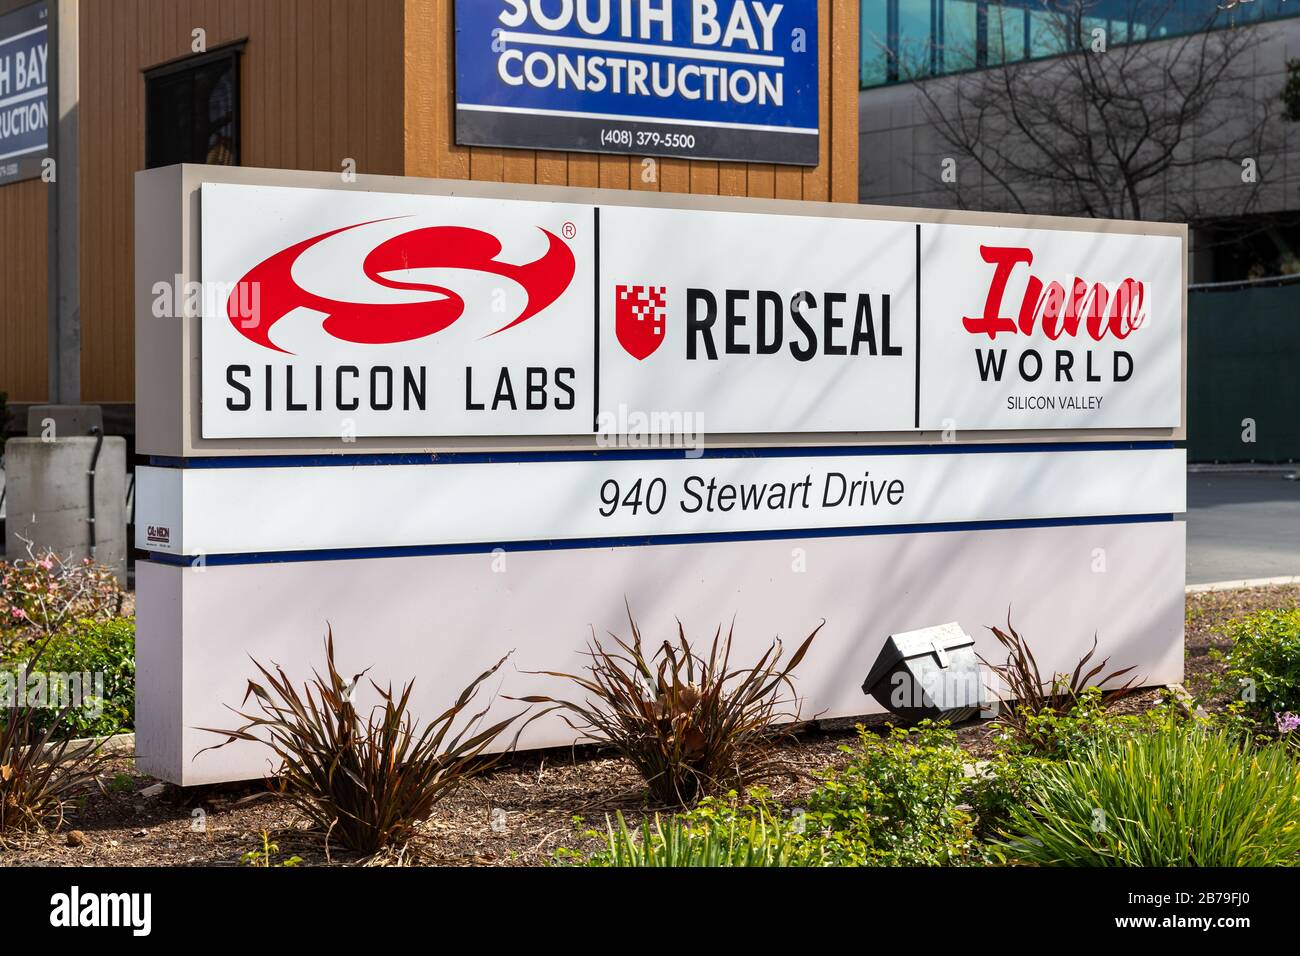 Silicon Labs, RedSeal, Inno World Silicon Valley, sign, Stewart Drive, Sunnyvale, California, USA Stock Photo